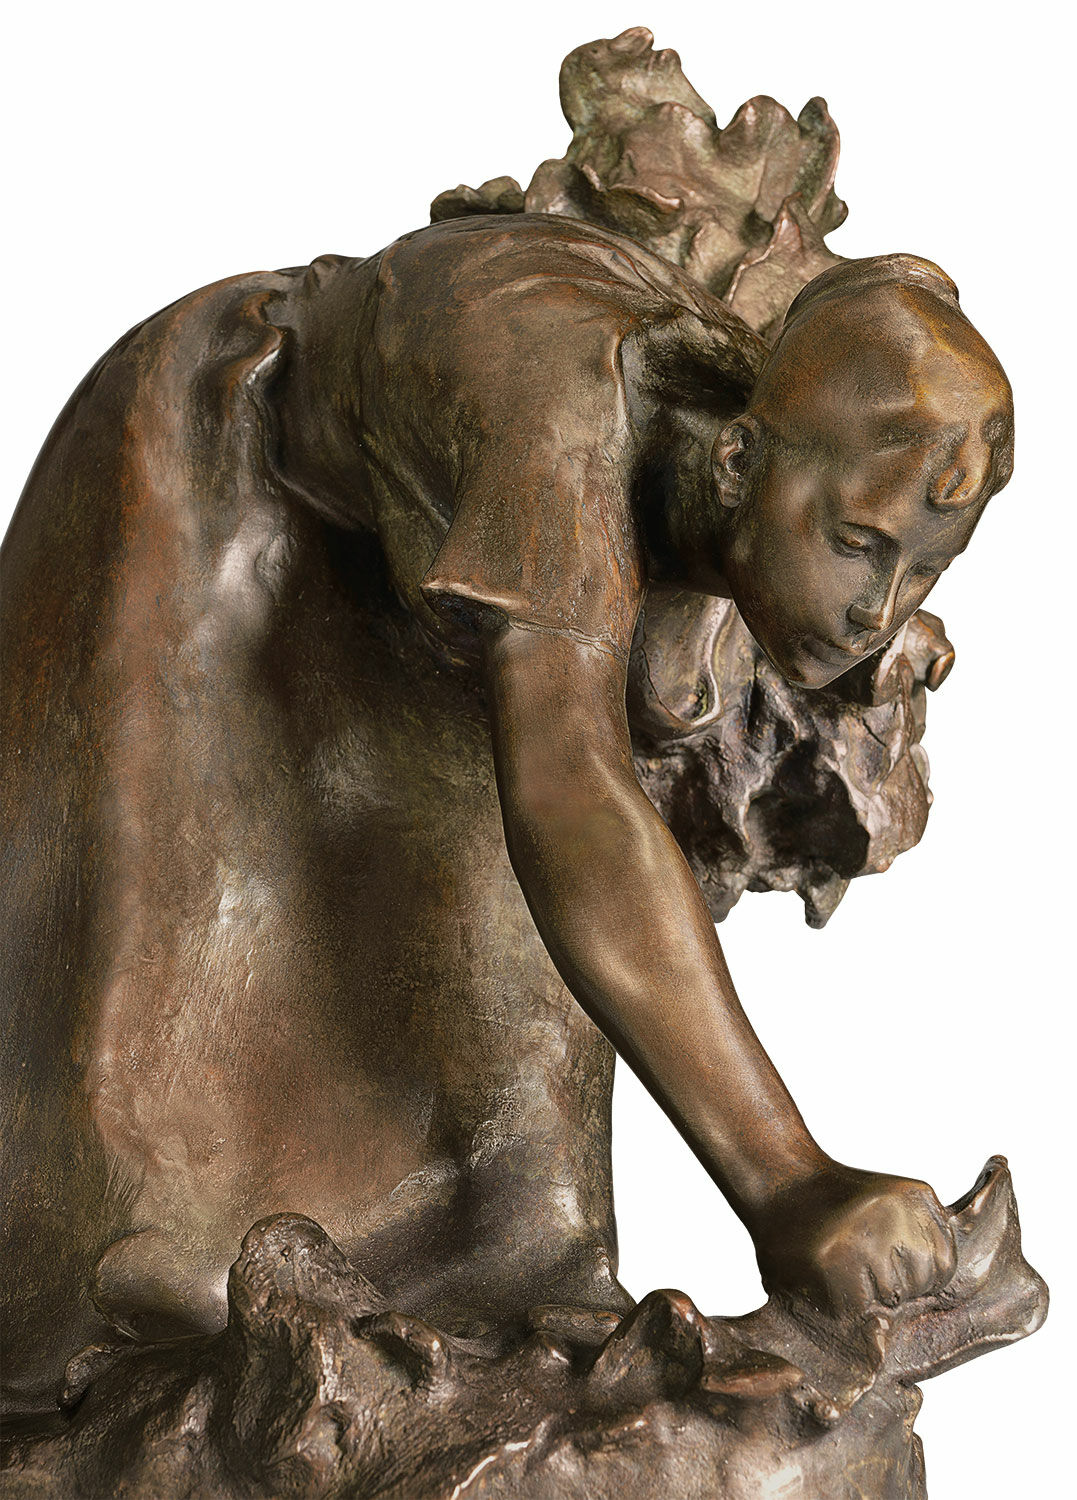 Sculpture "The Herb Plucker" (1894), reduction in bronze by Ernst Barlach